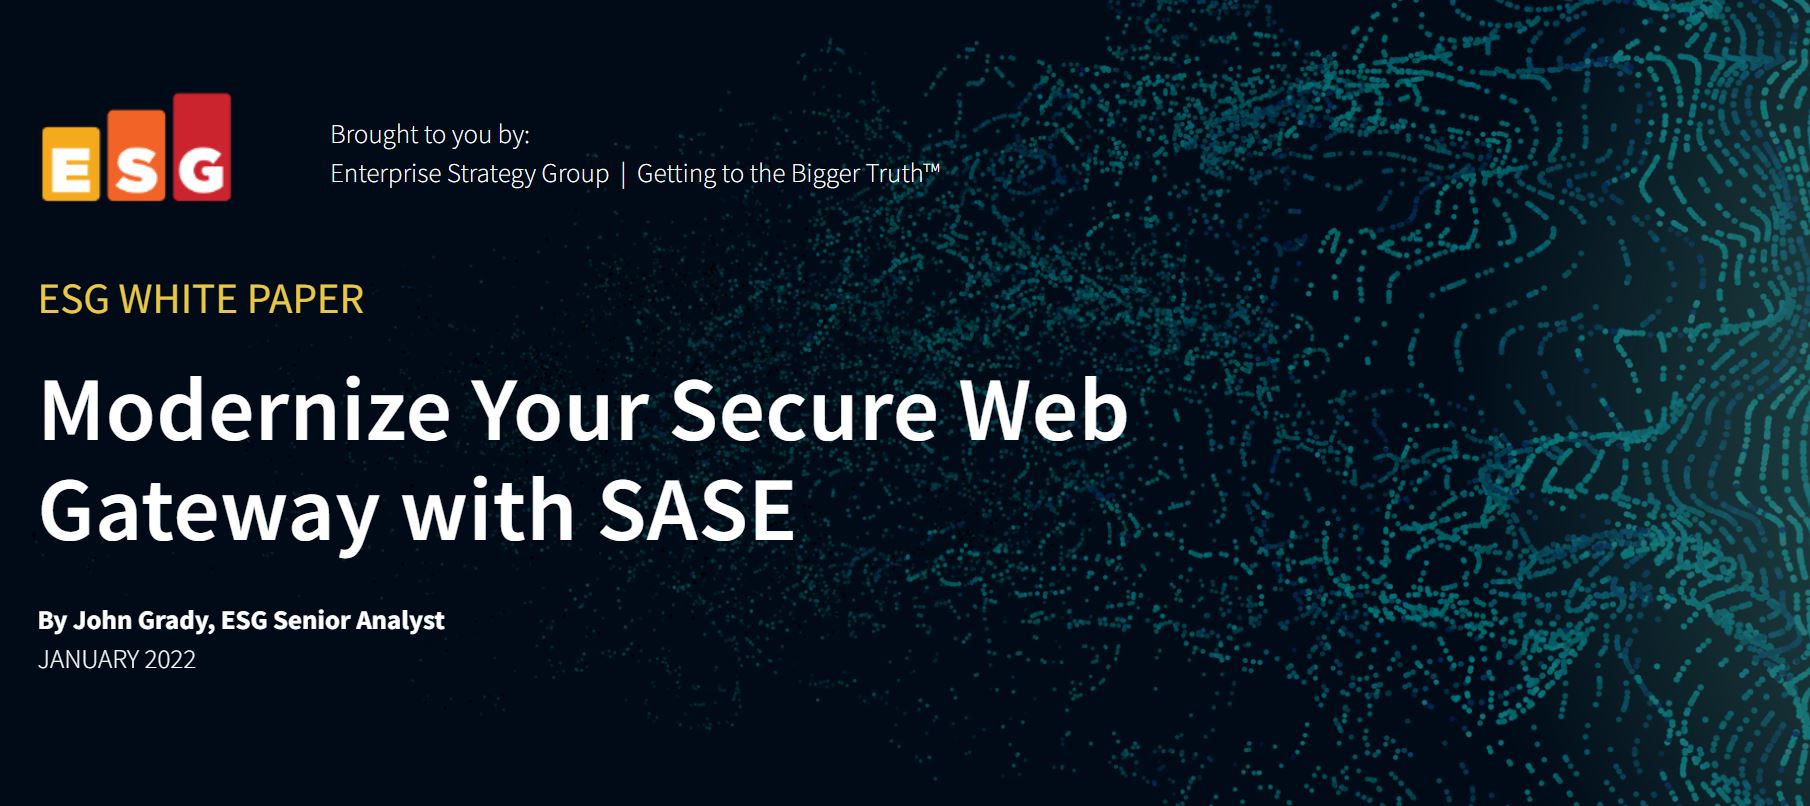 Modernize Your Secure Web Gateway with SASE